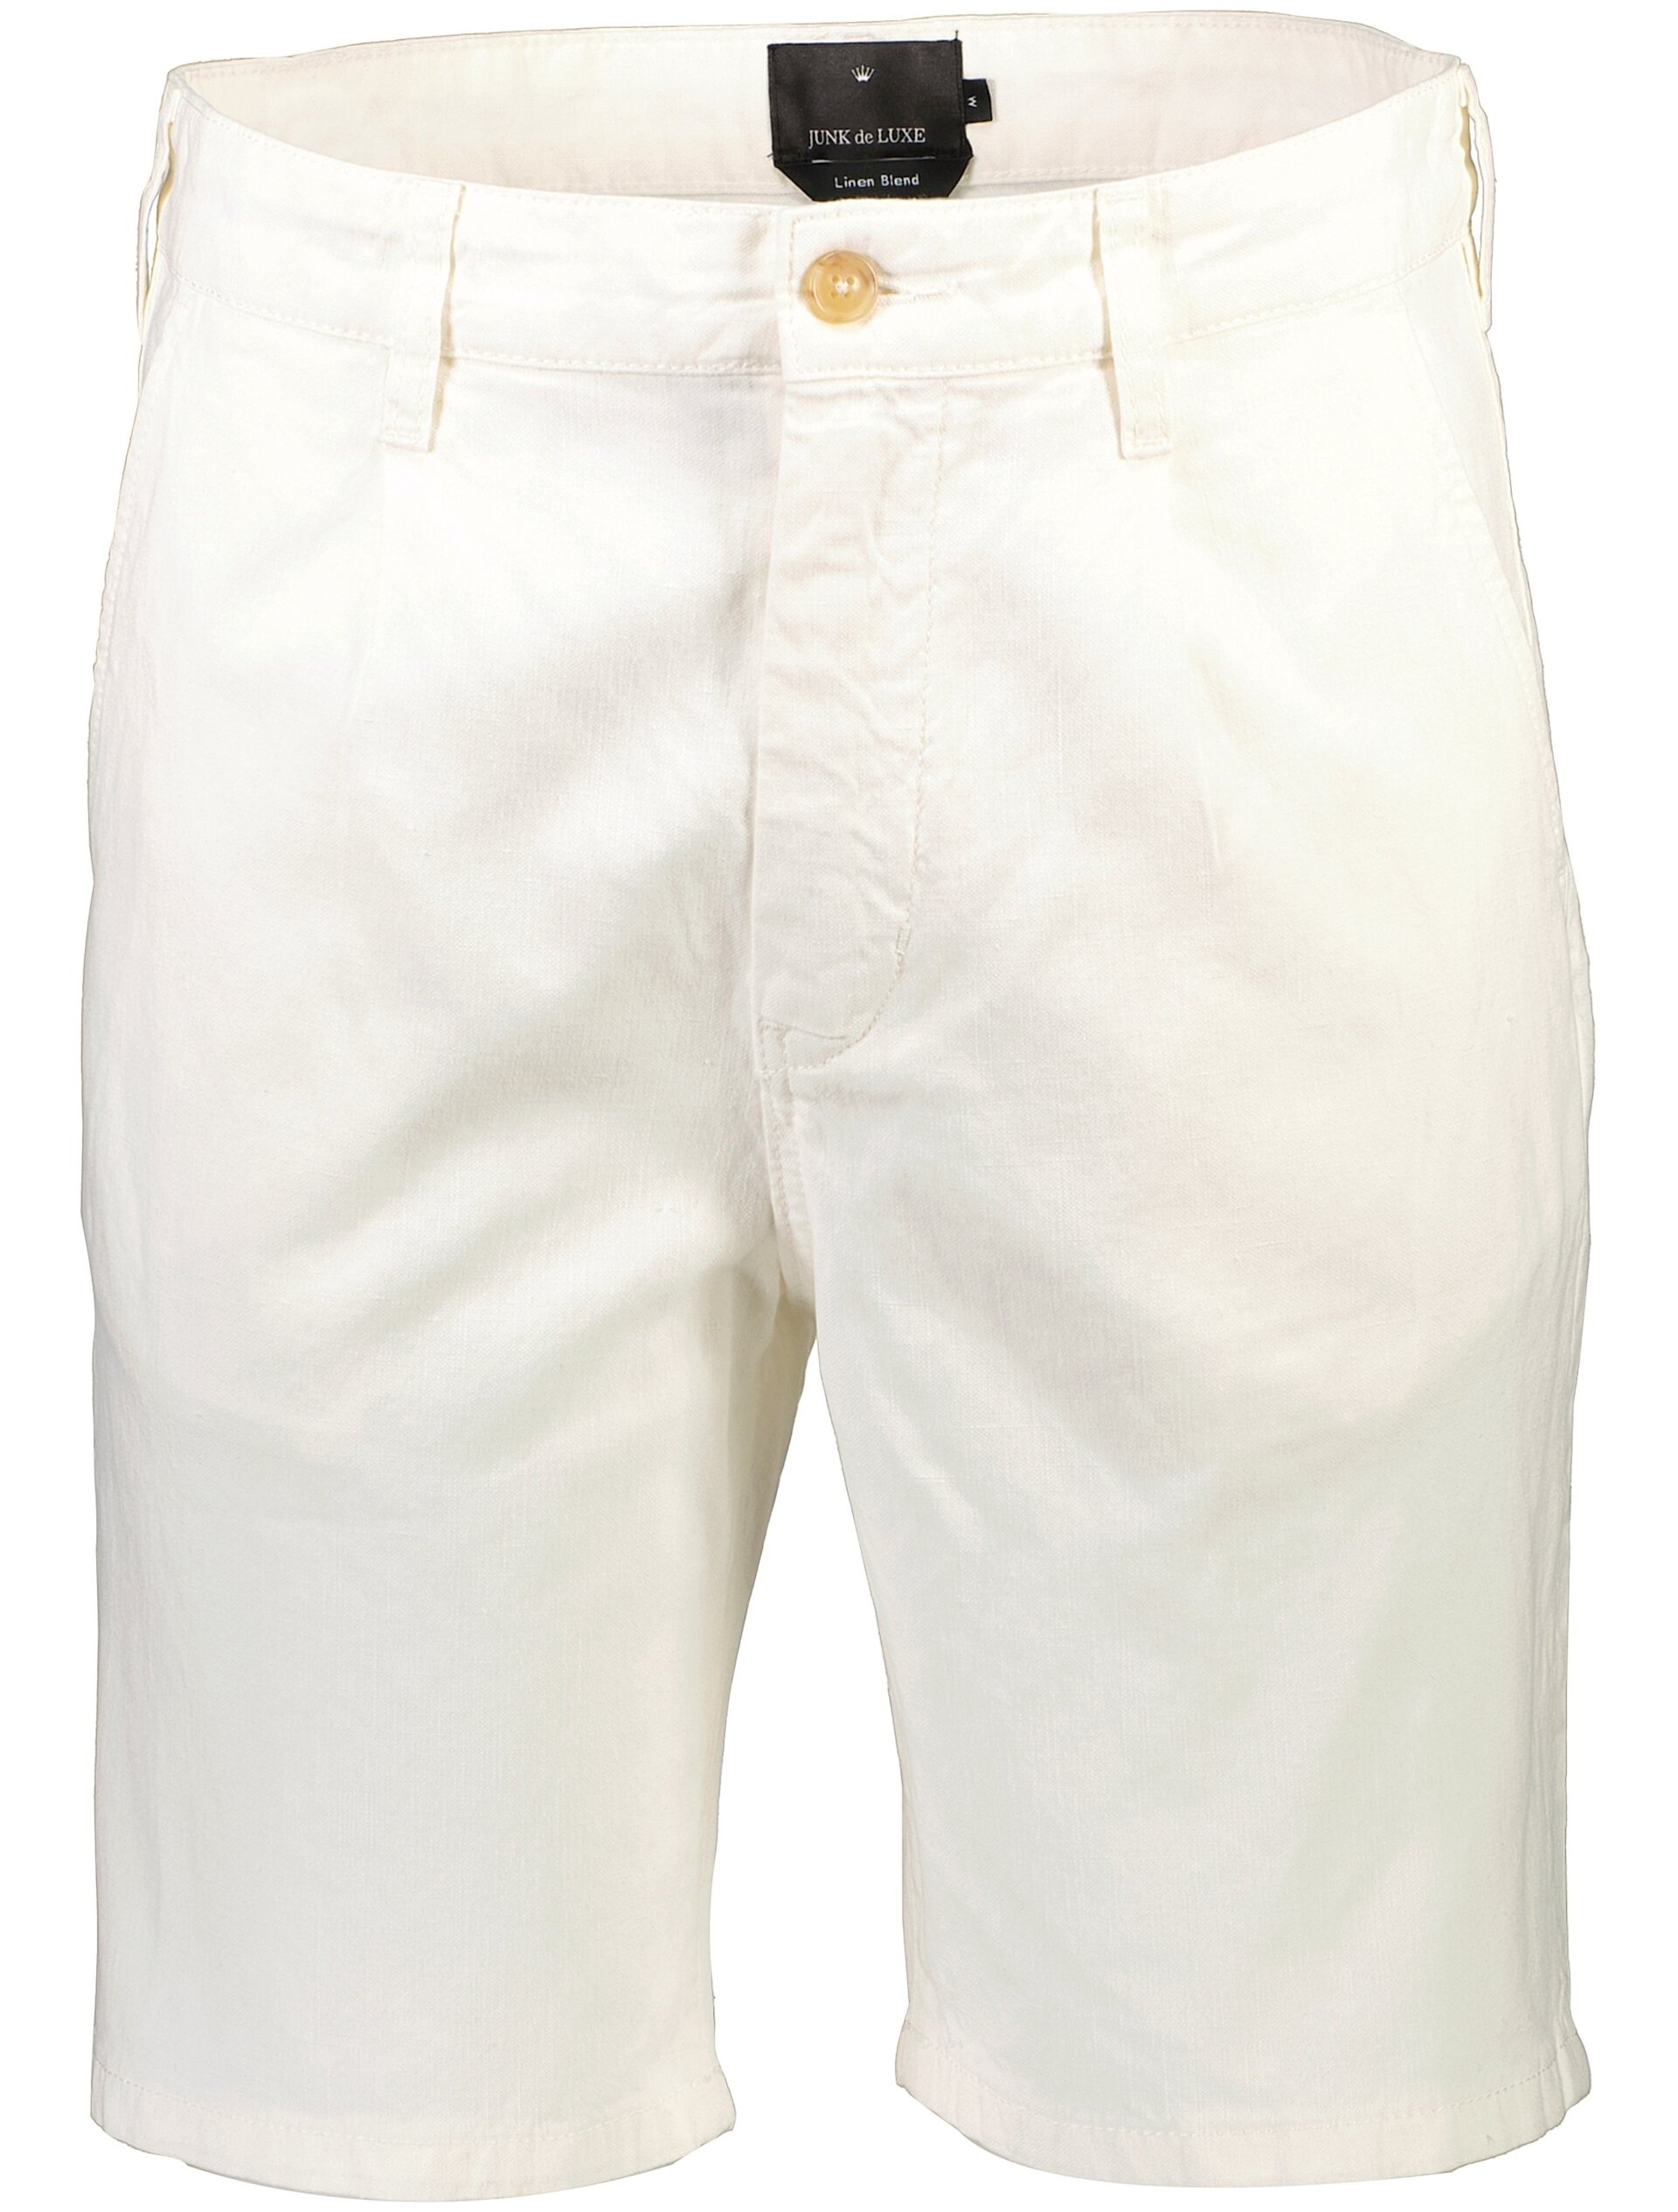 Junk de Luxe Linen shorts white / off white